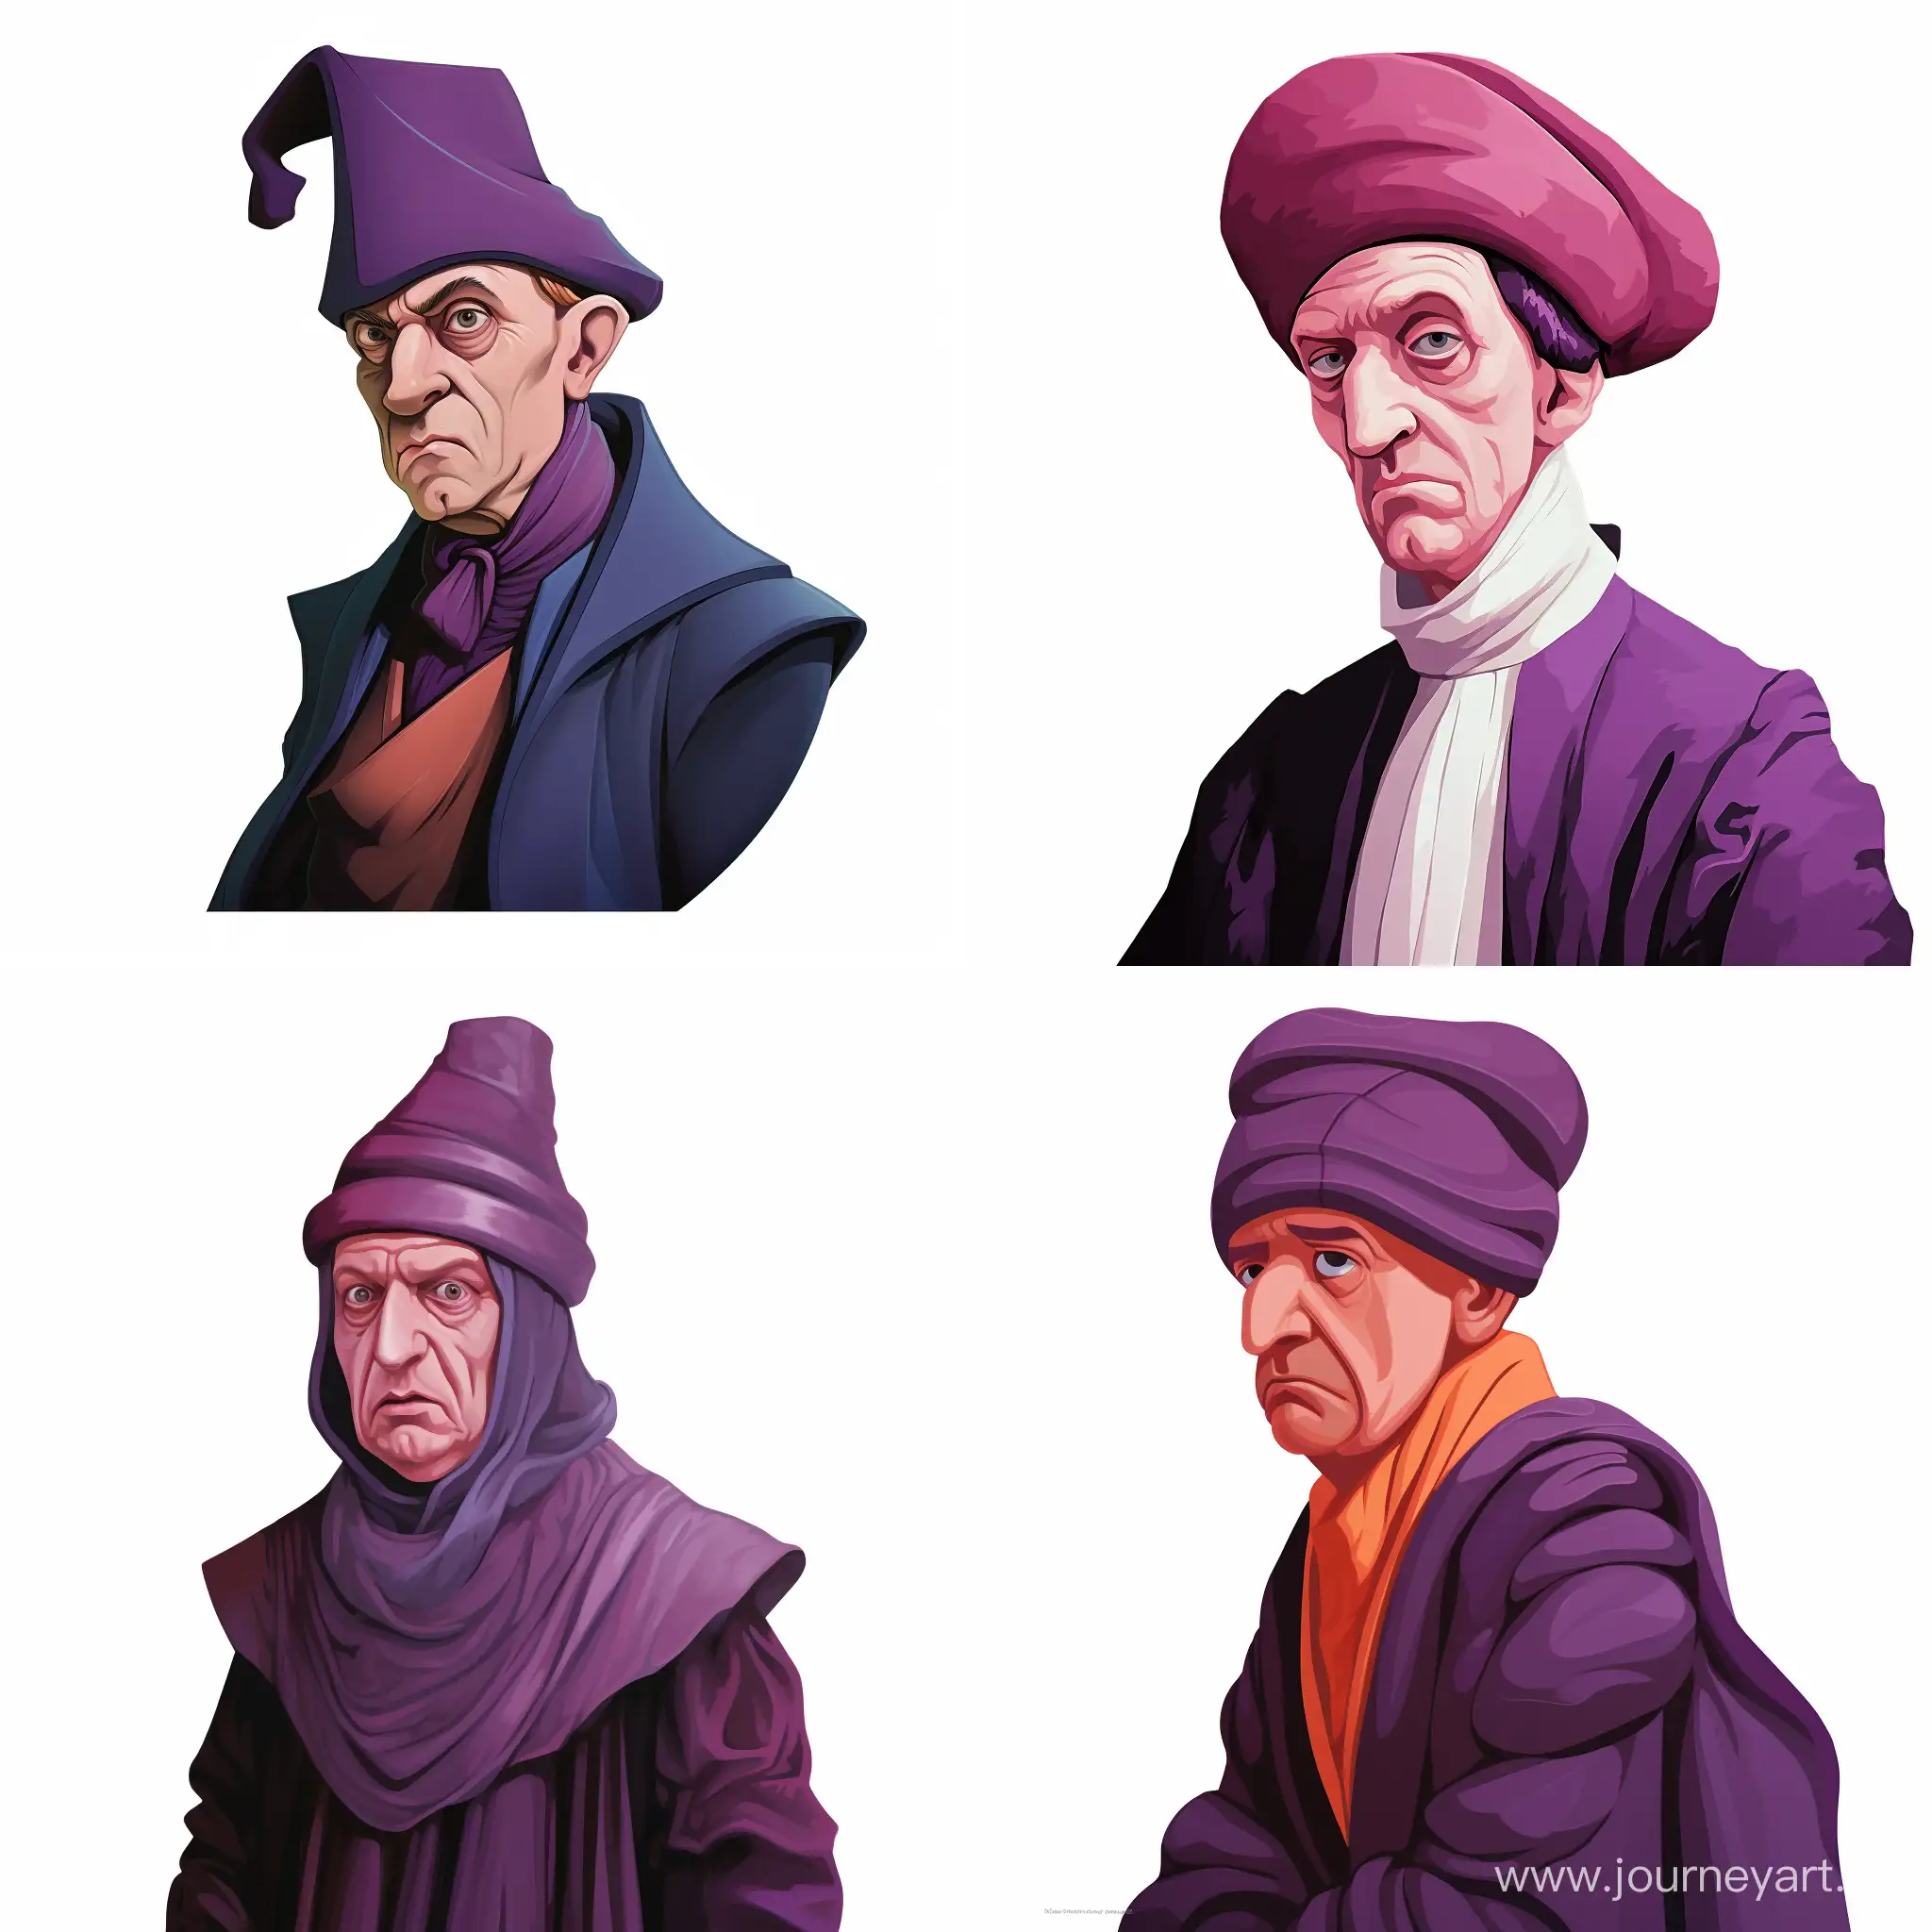 Ian-Hart-Lookalike-Quirrell-in-Cartoon-Style-with-Purple-Turban